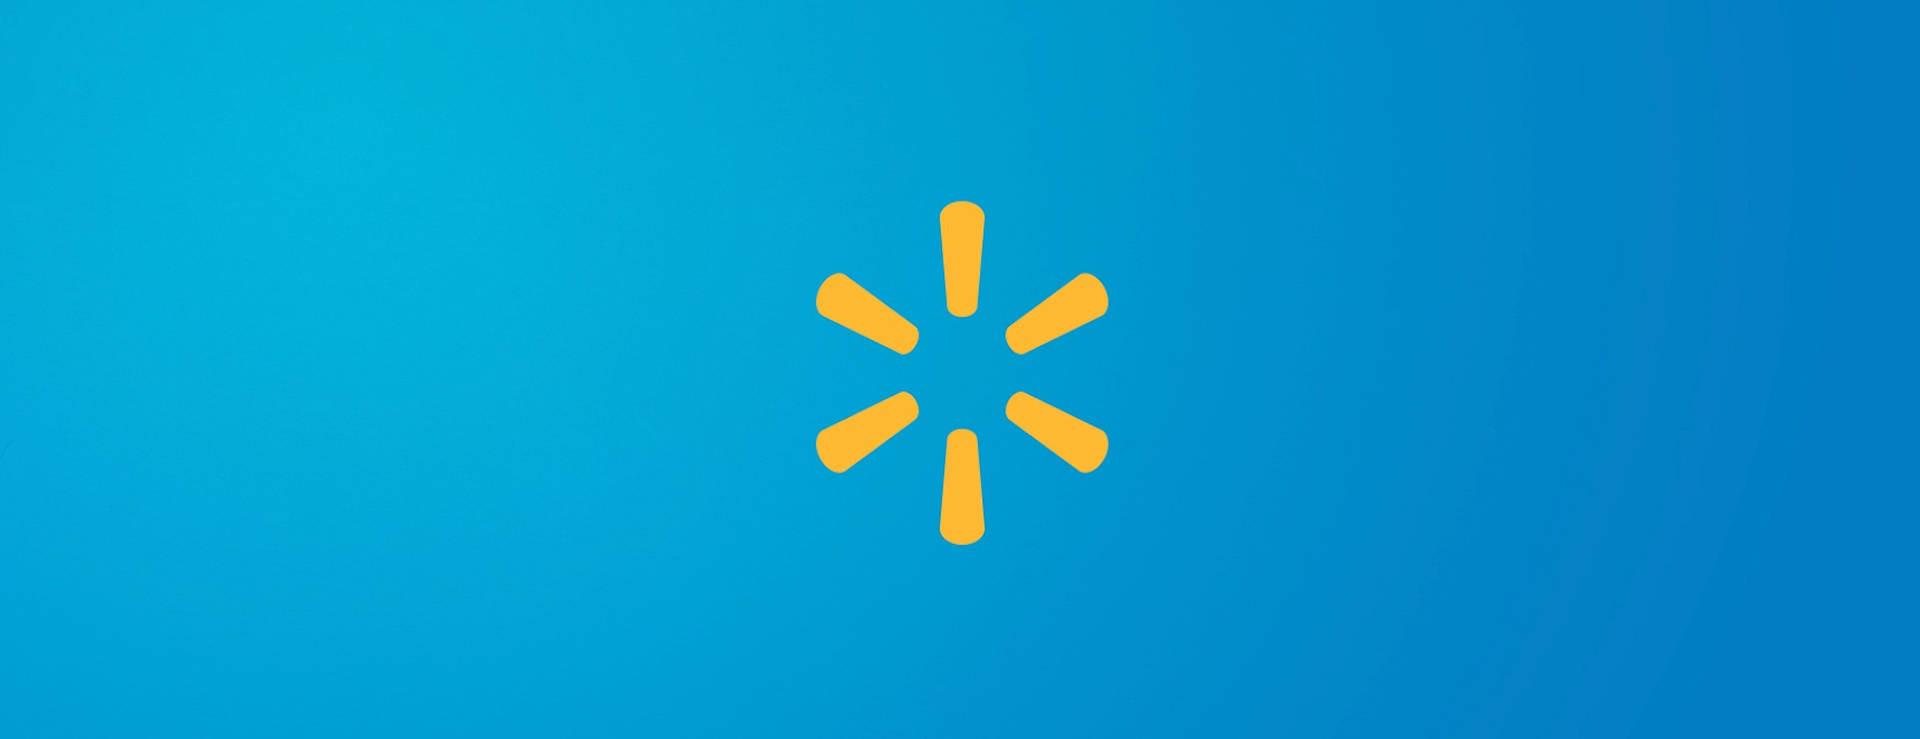 Blue Walmart Spark Logo Background